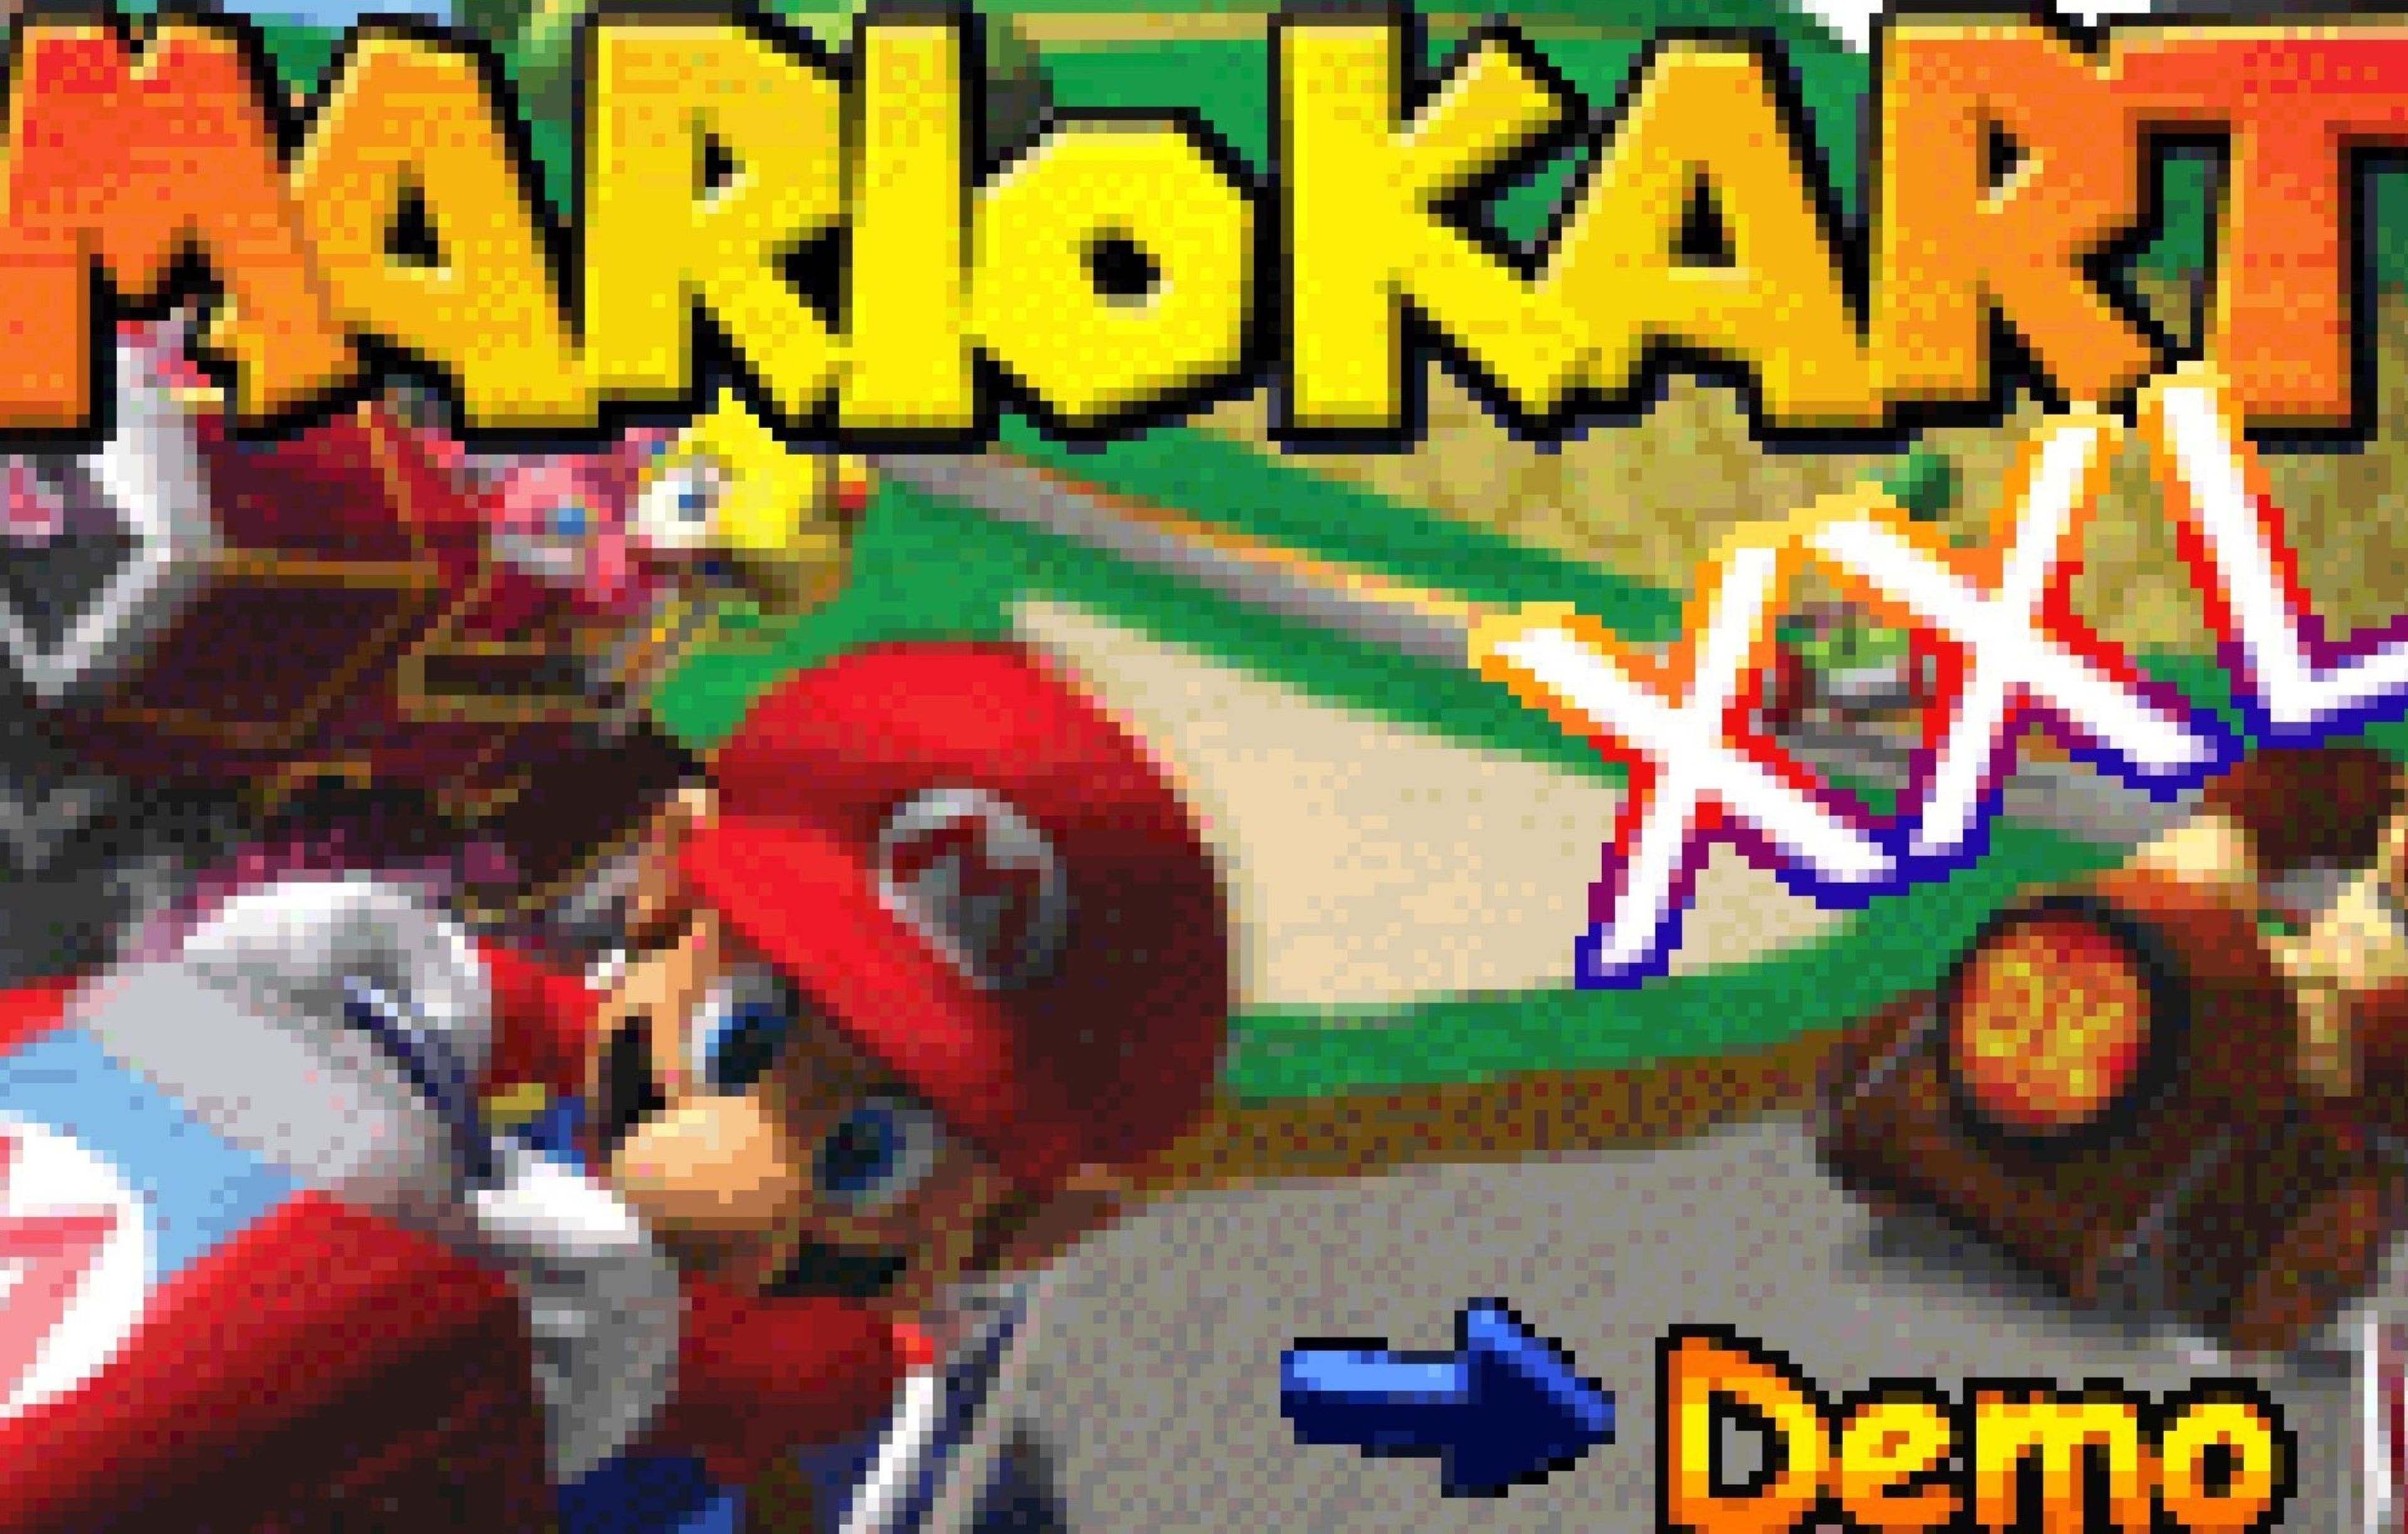 Mario Kart XXL